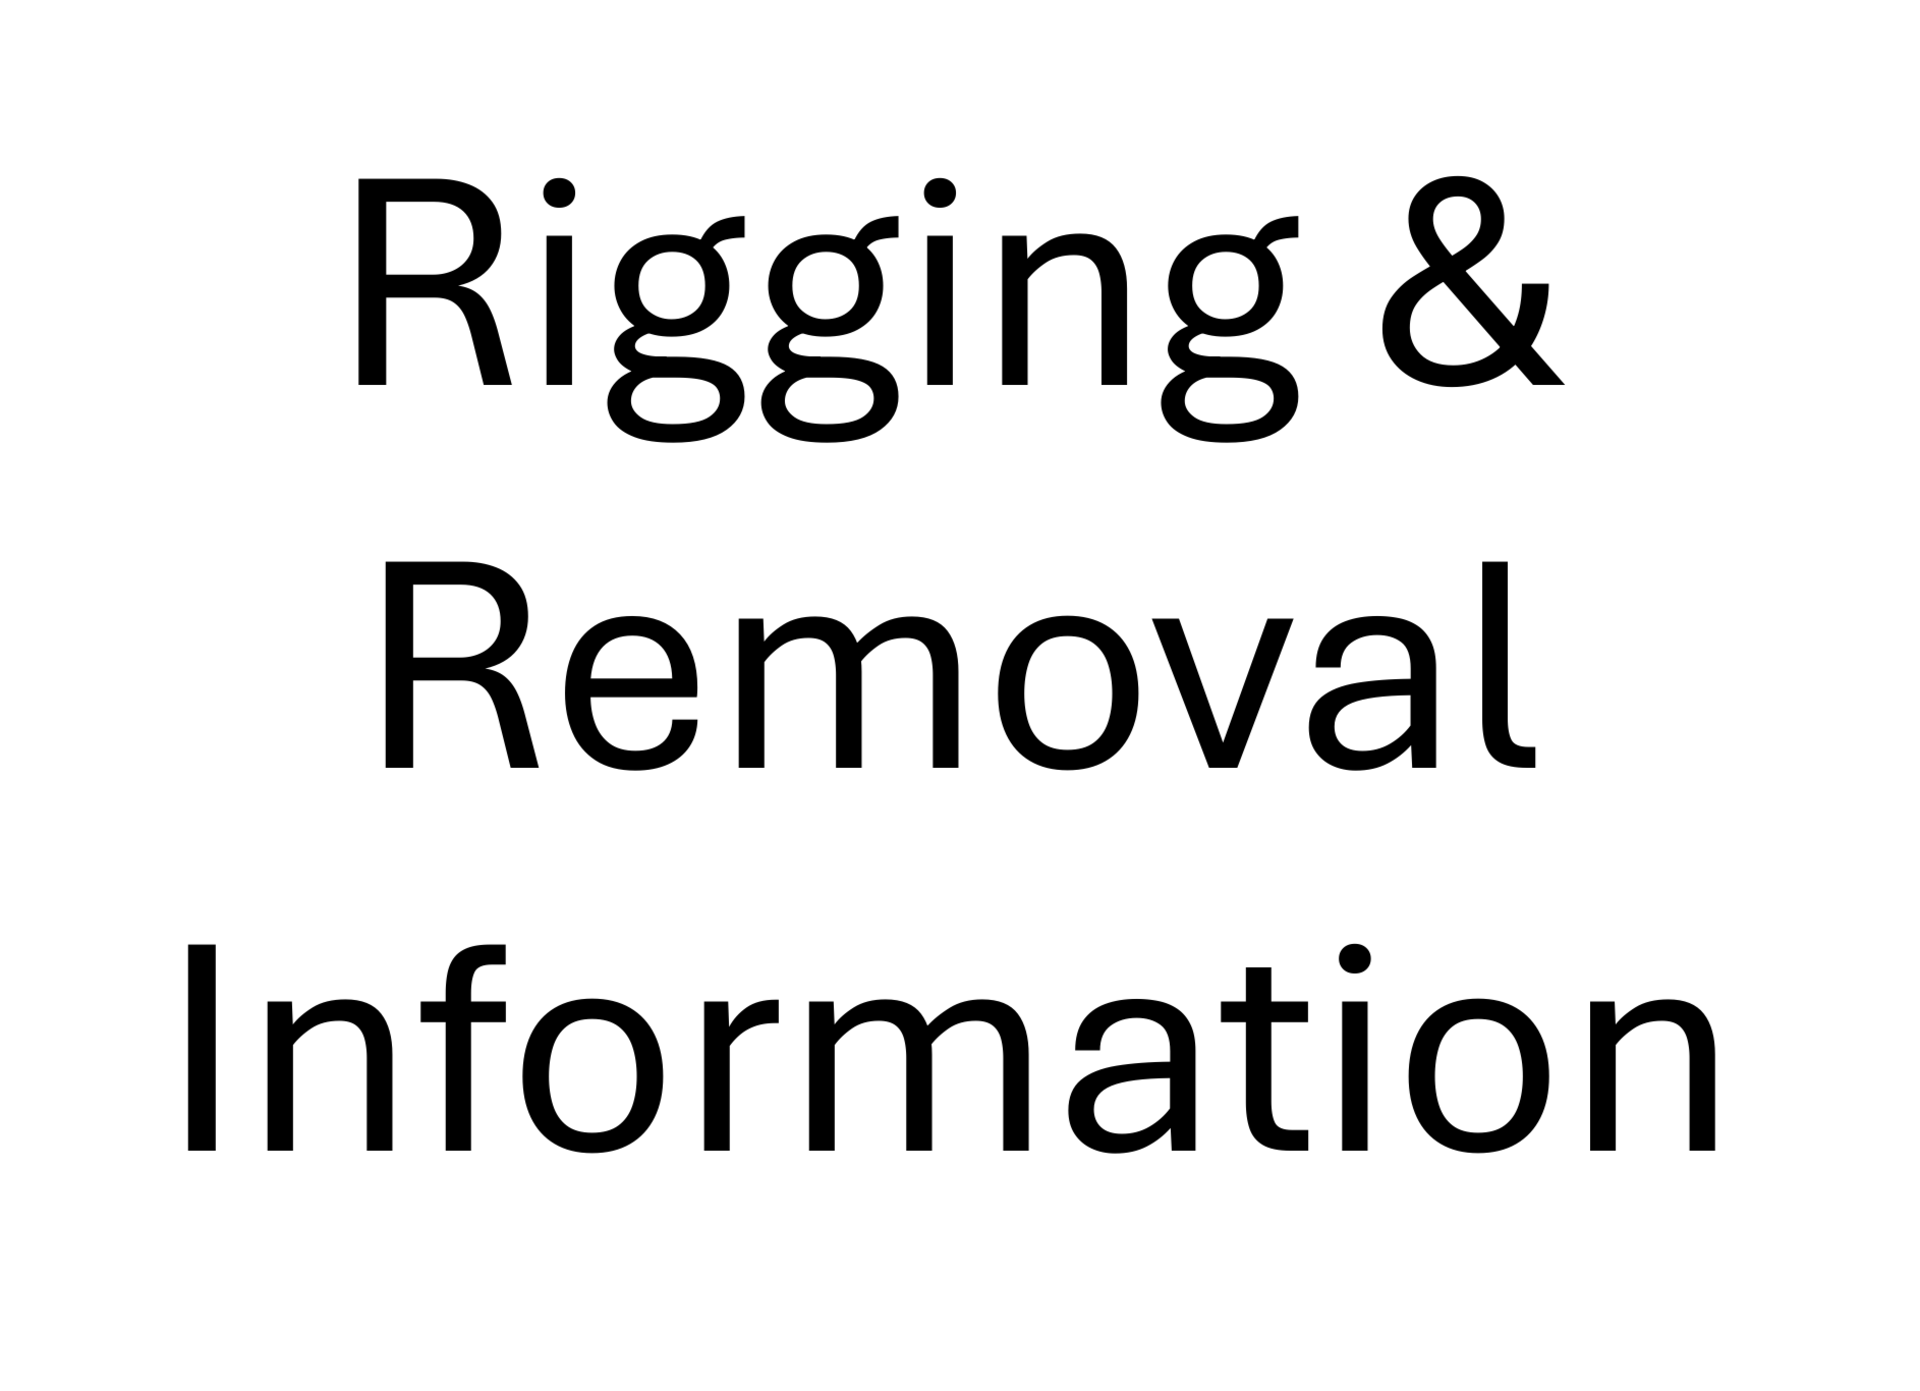 Rigging & Removal Info